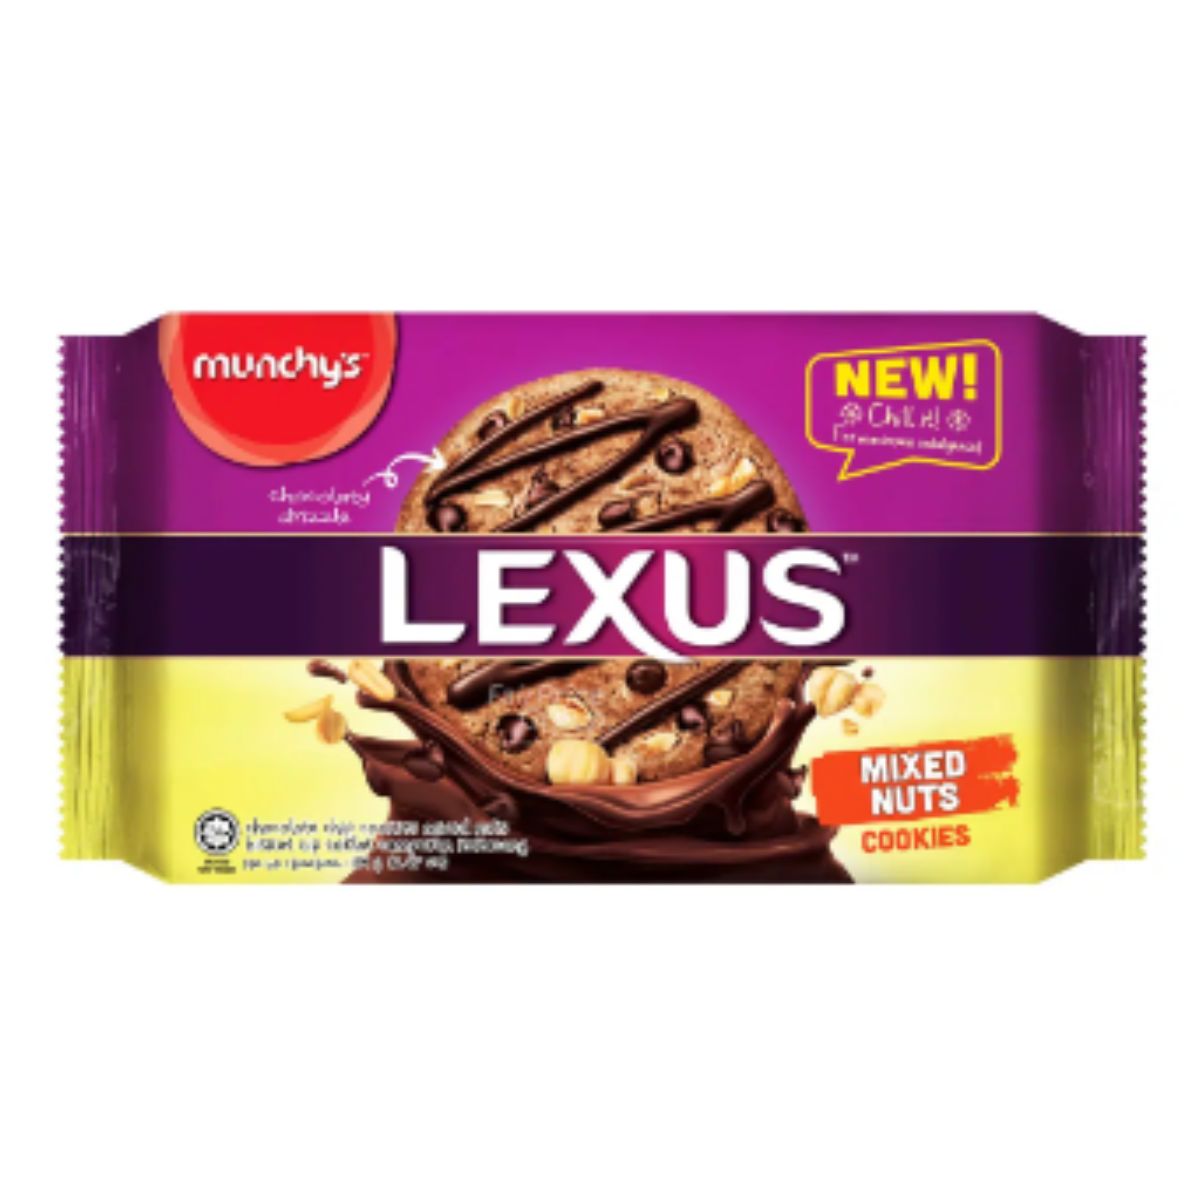 Munchy's Lexus - Mixed Nuts Cookies - 189g